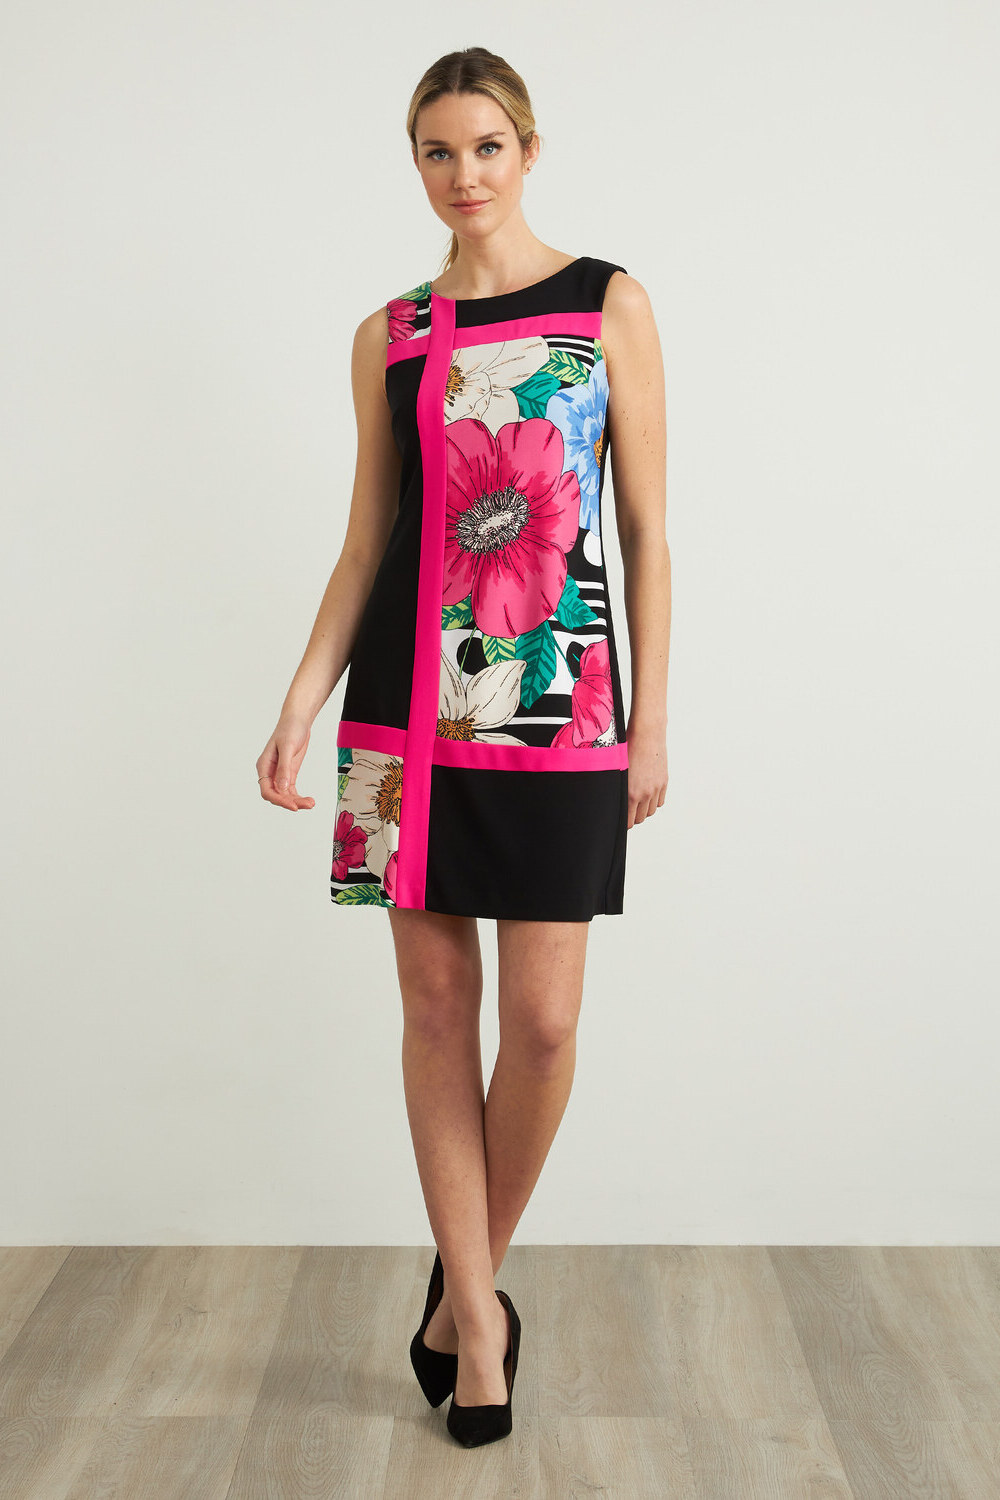 Joseph Ribkoff Floral Colour Block Dress Style 212040. Black/multi